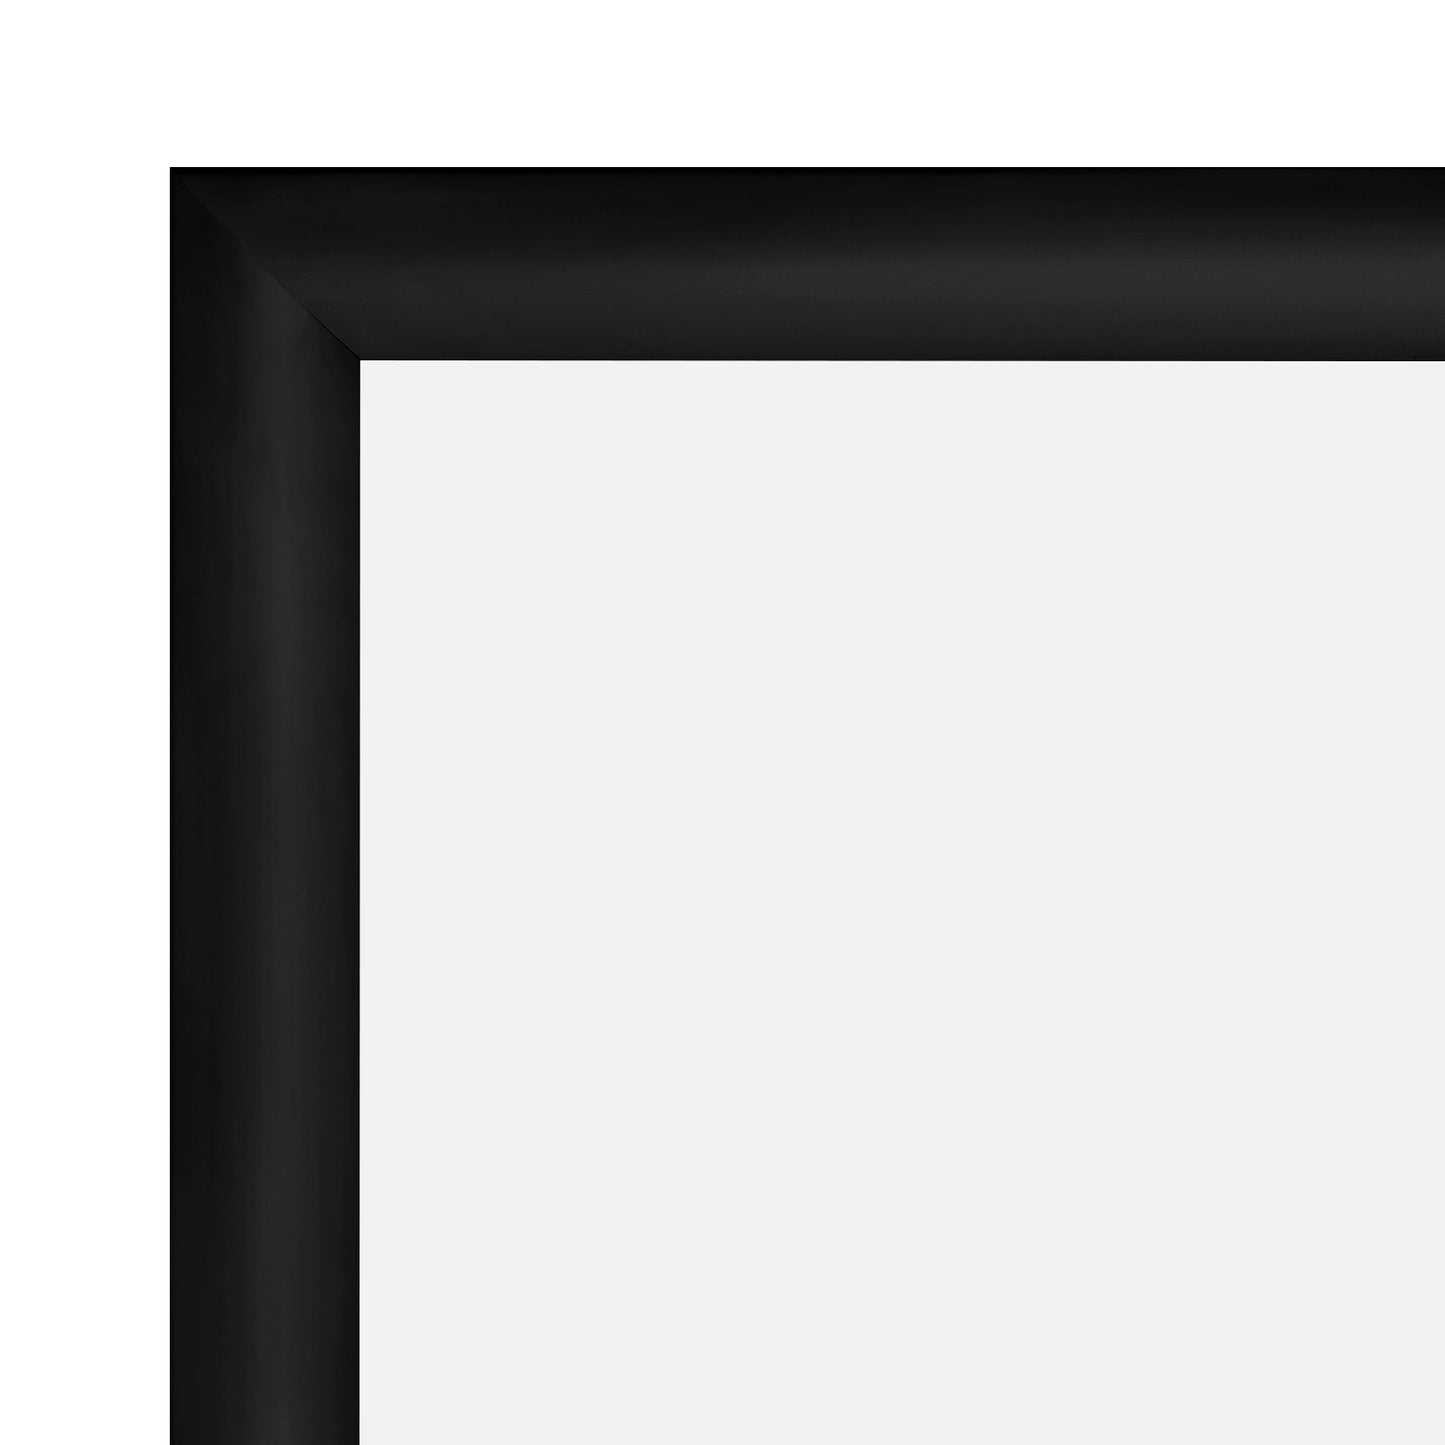 11x22 Black SnapeZo® Snap Frame - 1.2" Profile - Snap Frames Direct